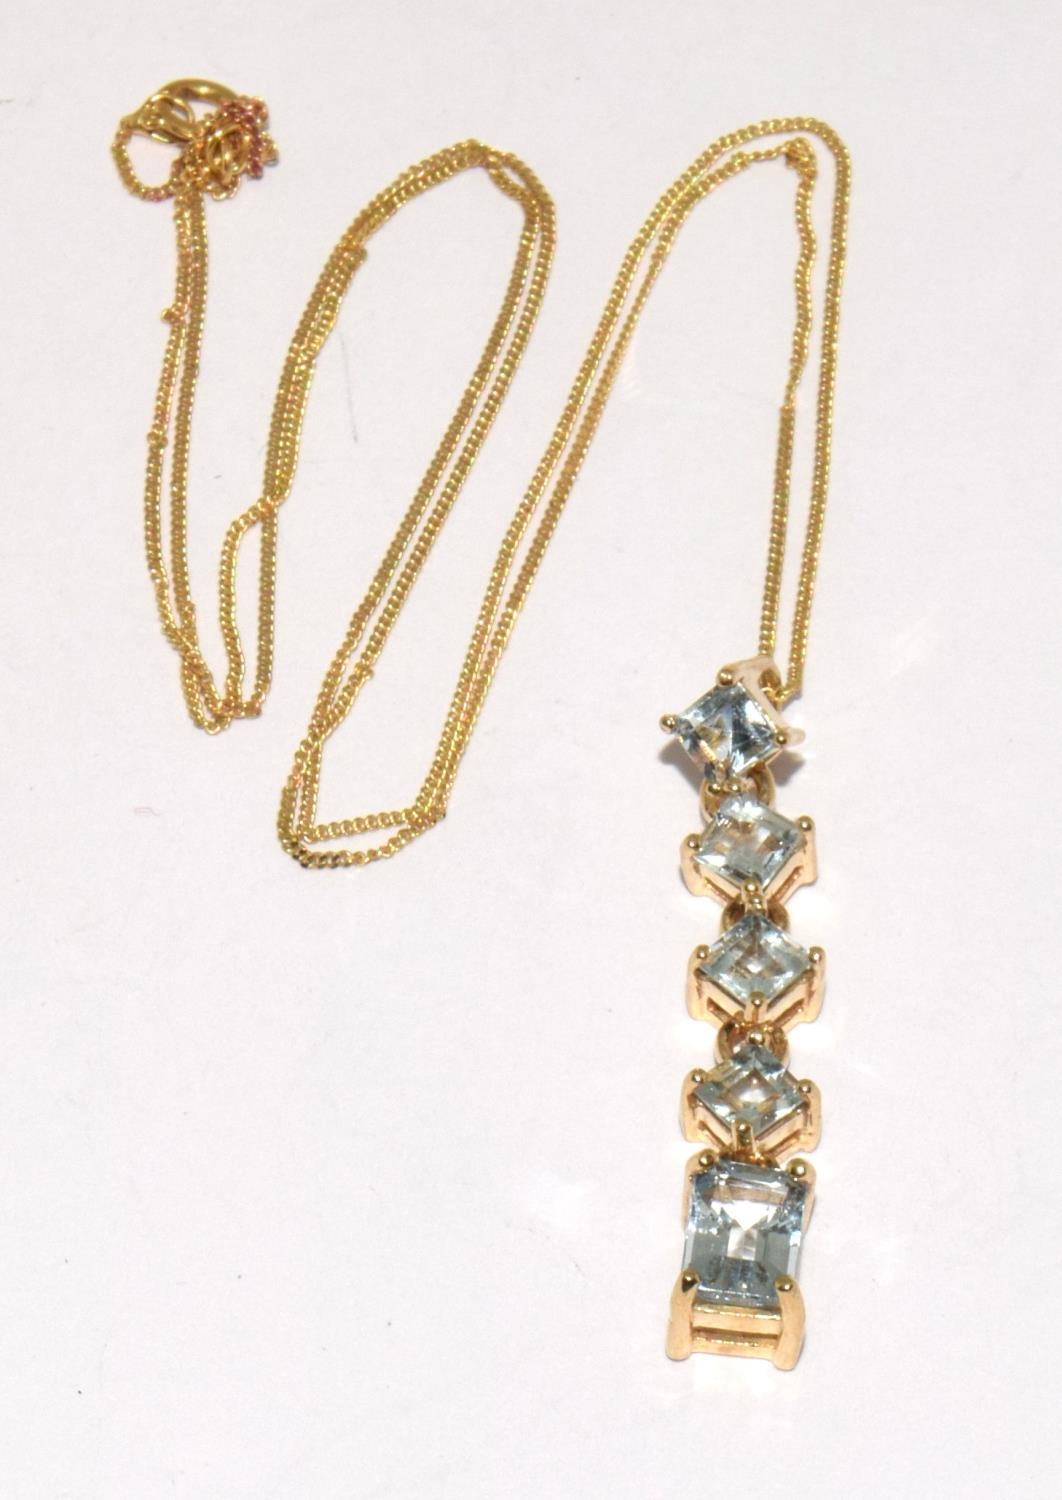 9ct gold 5 stone drop Aquamarine pendant necklace with chain 40cm